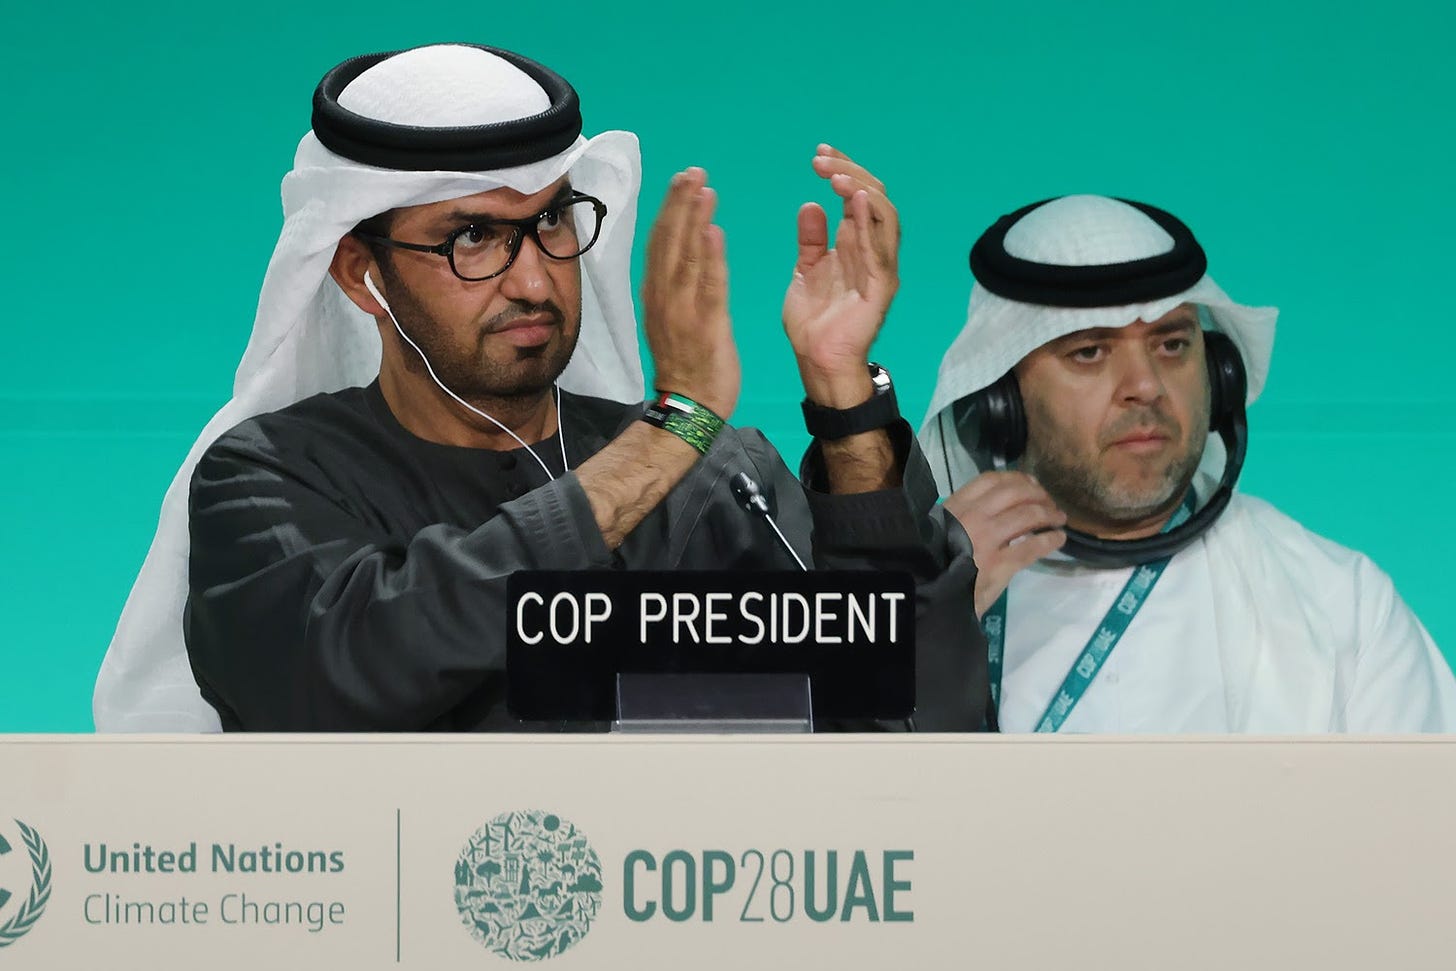 COP28 President Sultan Ahmed al-Jaber and COP28 Director-General Majid al-Suwaidi attend a plenary session.